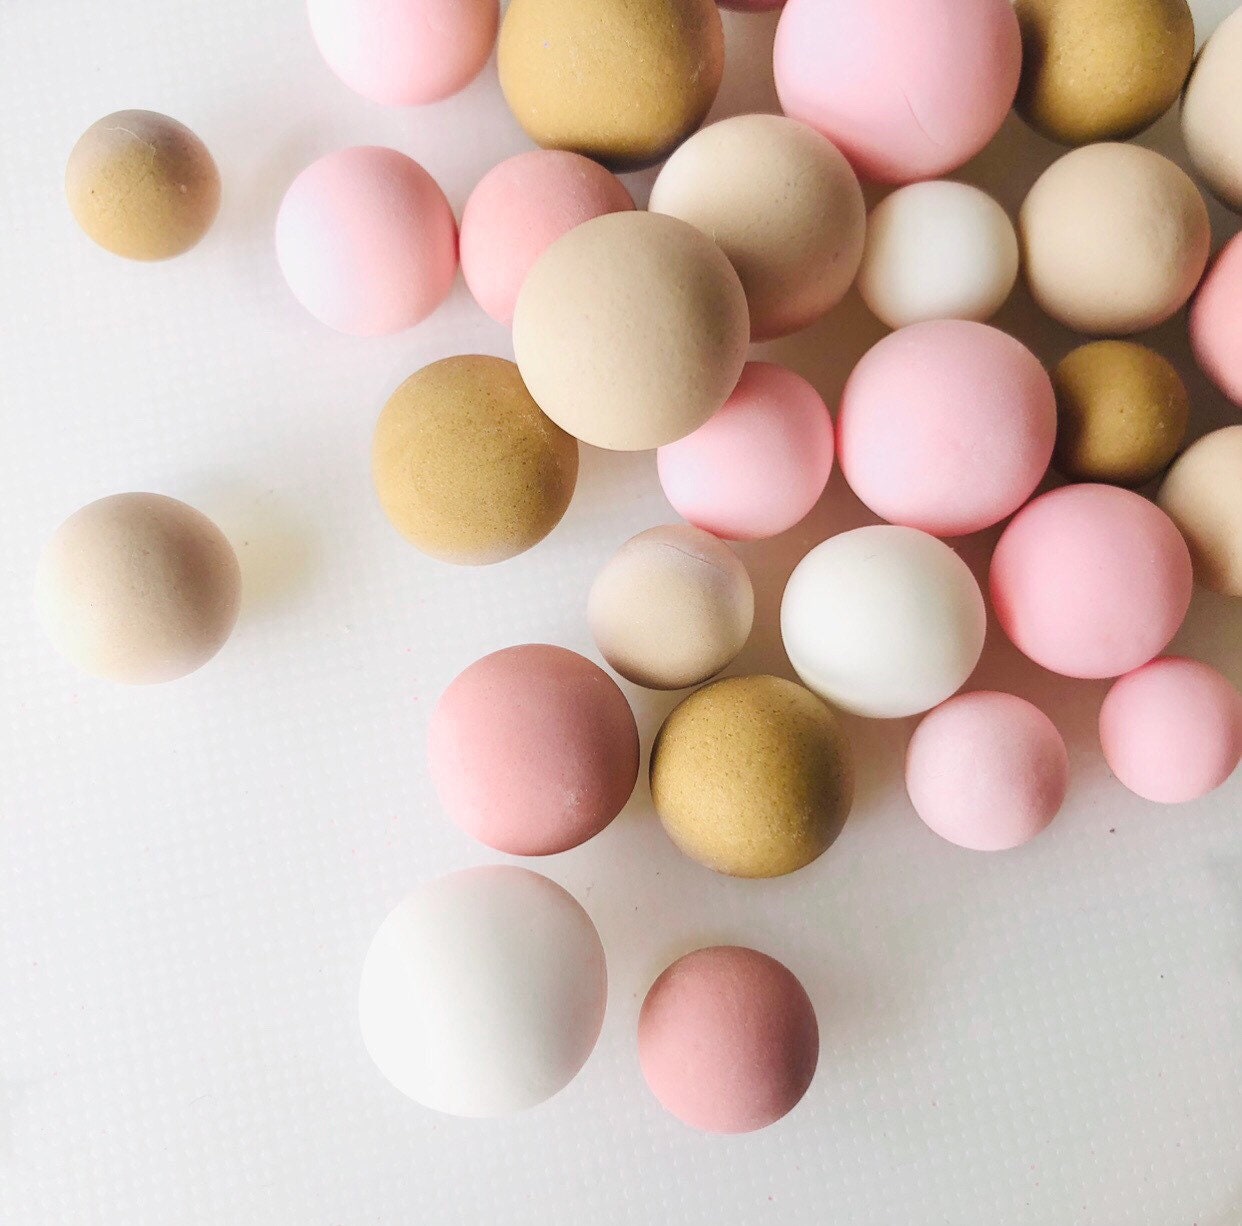 Sugar Pearls Balls Cake Decorating Edible Cupcakes Oman